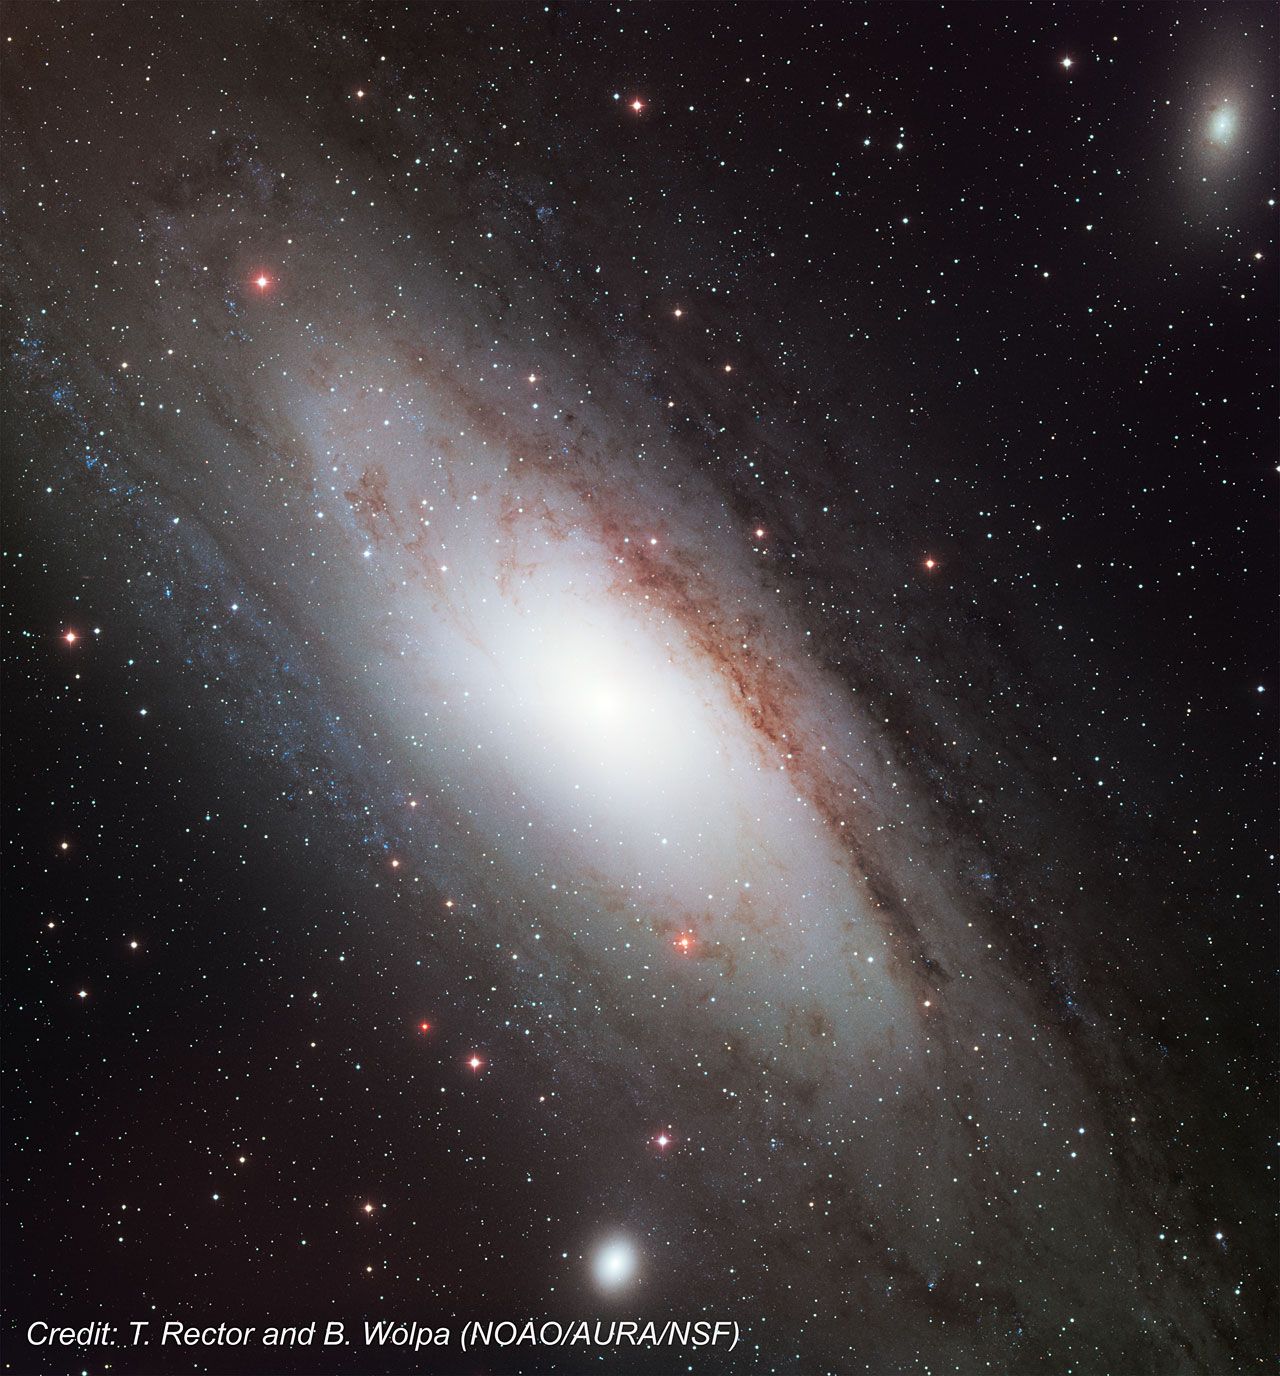 Ground Based Image Of Andromeda Galaxy, M31